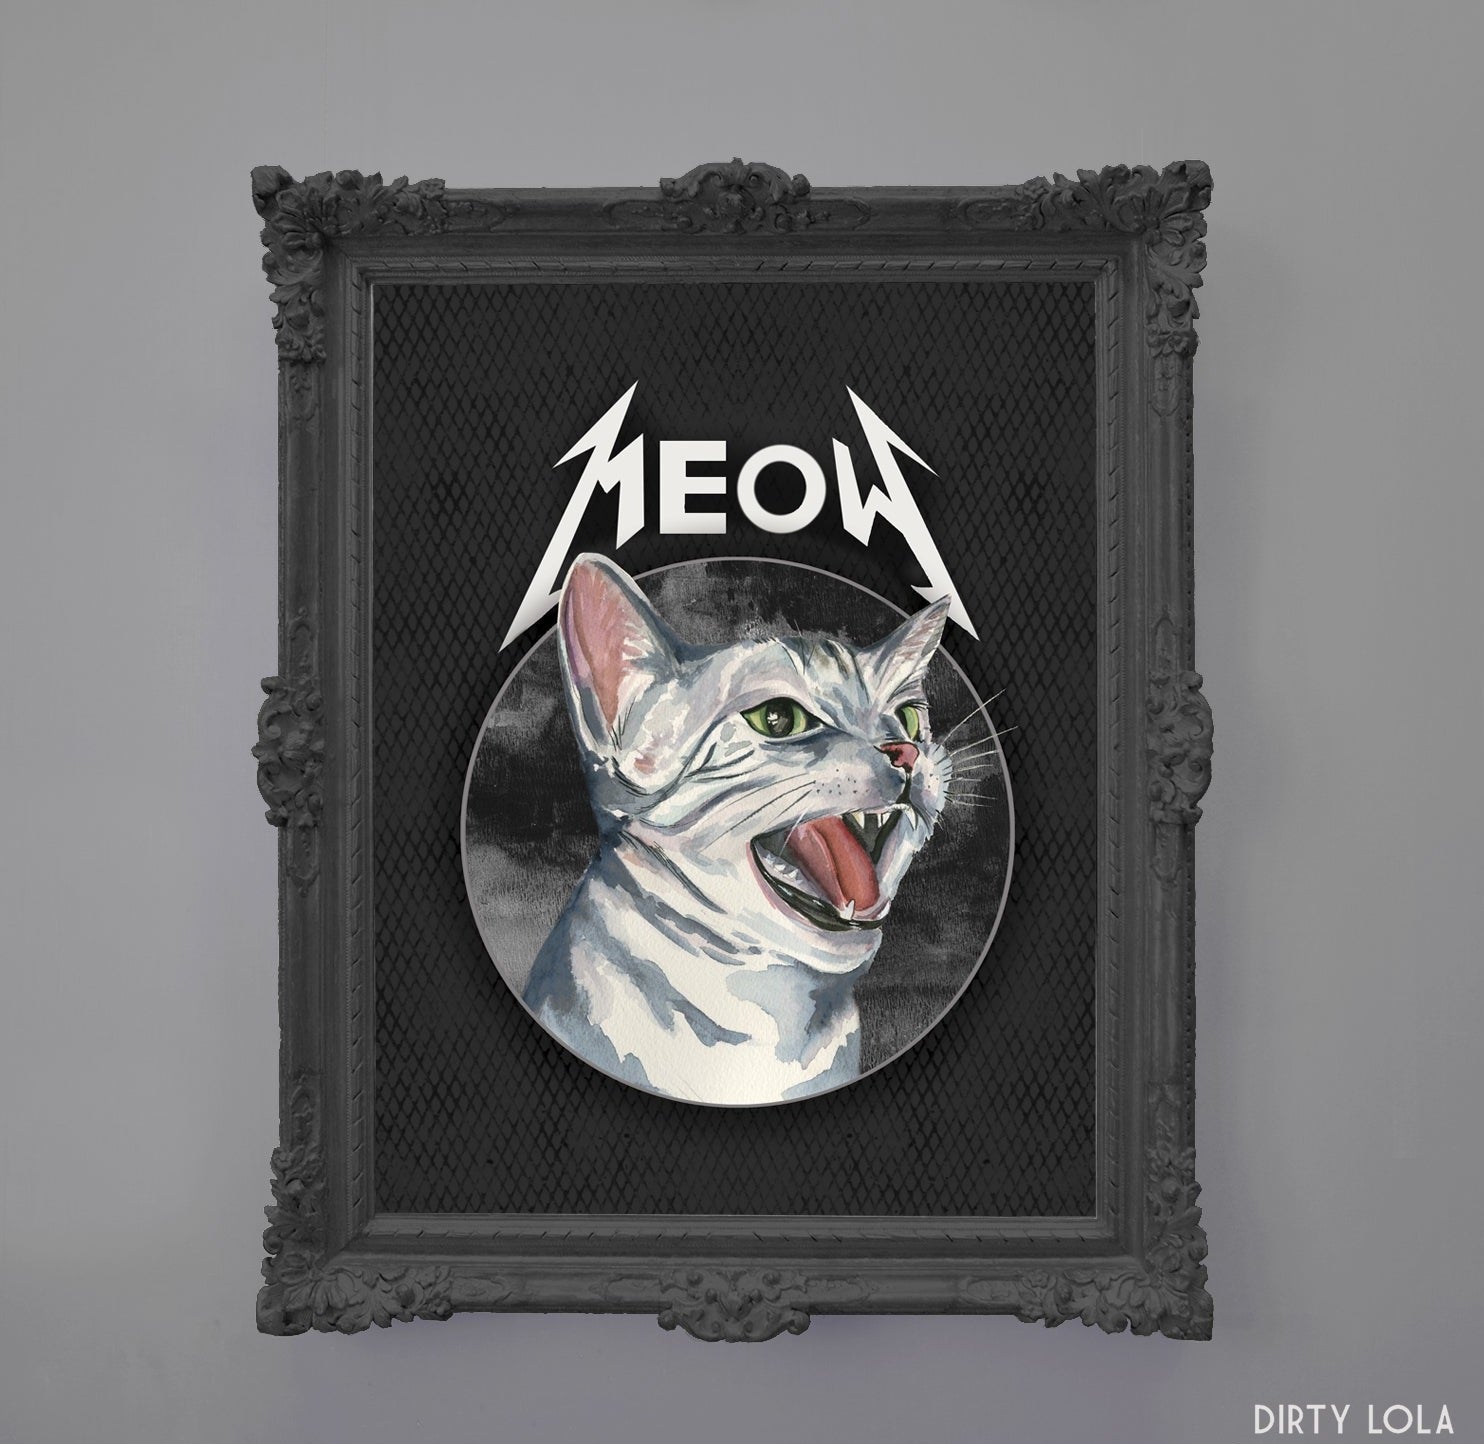 Metal Meow Art Print